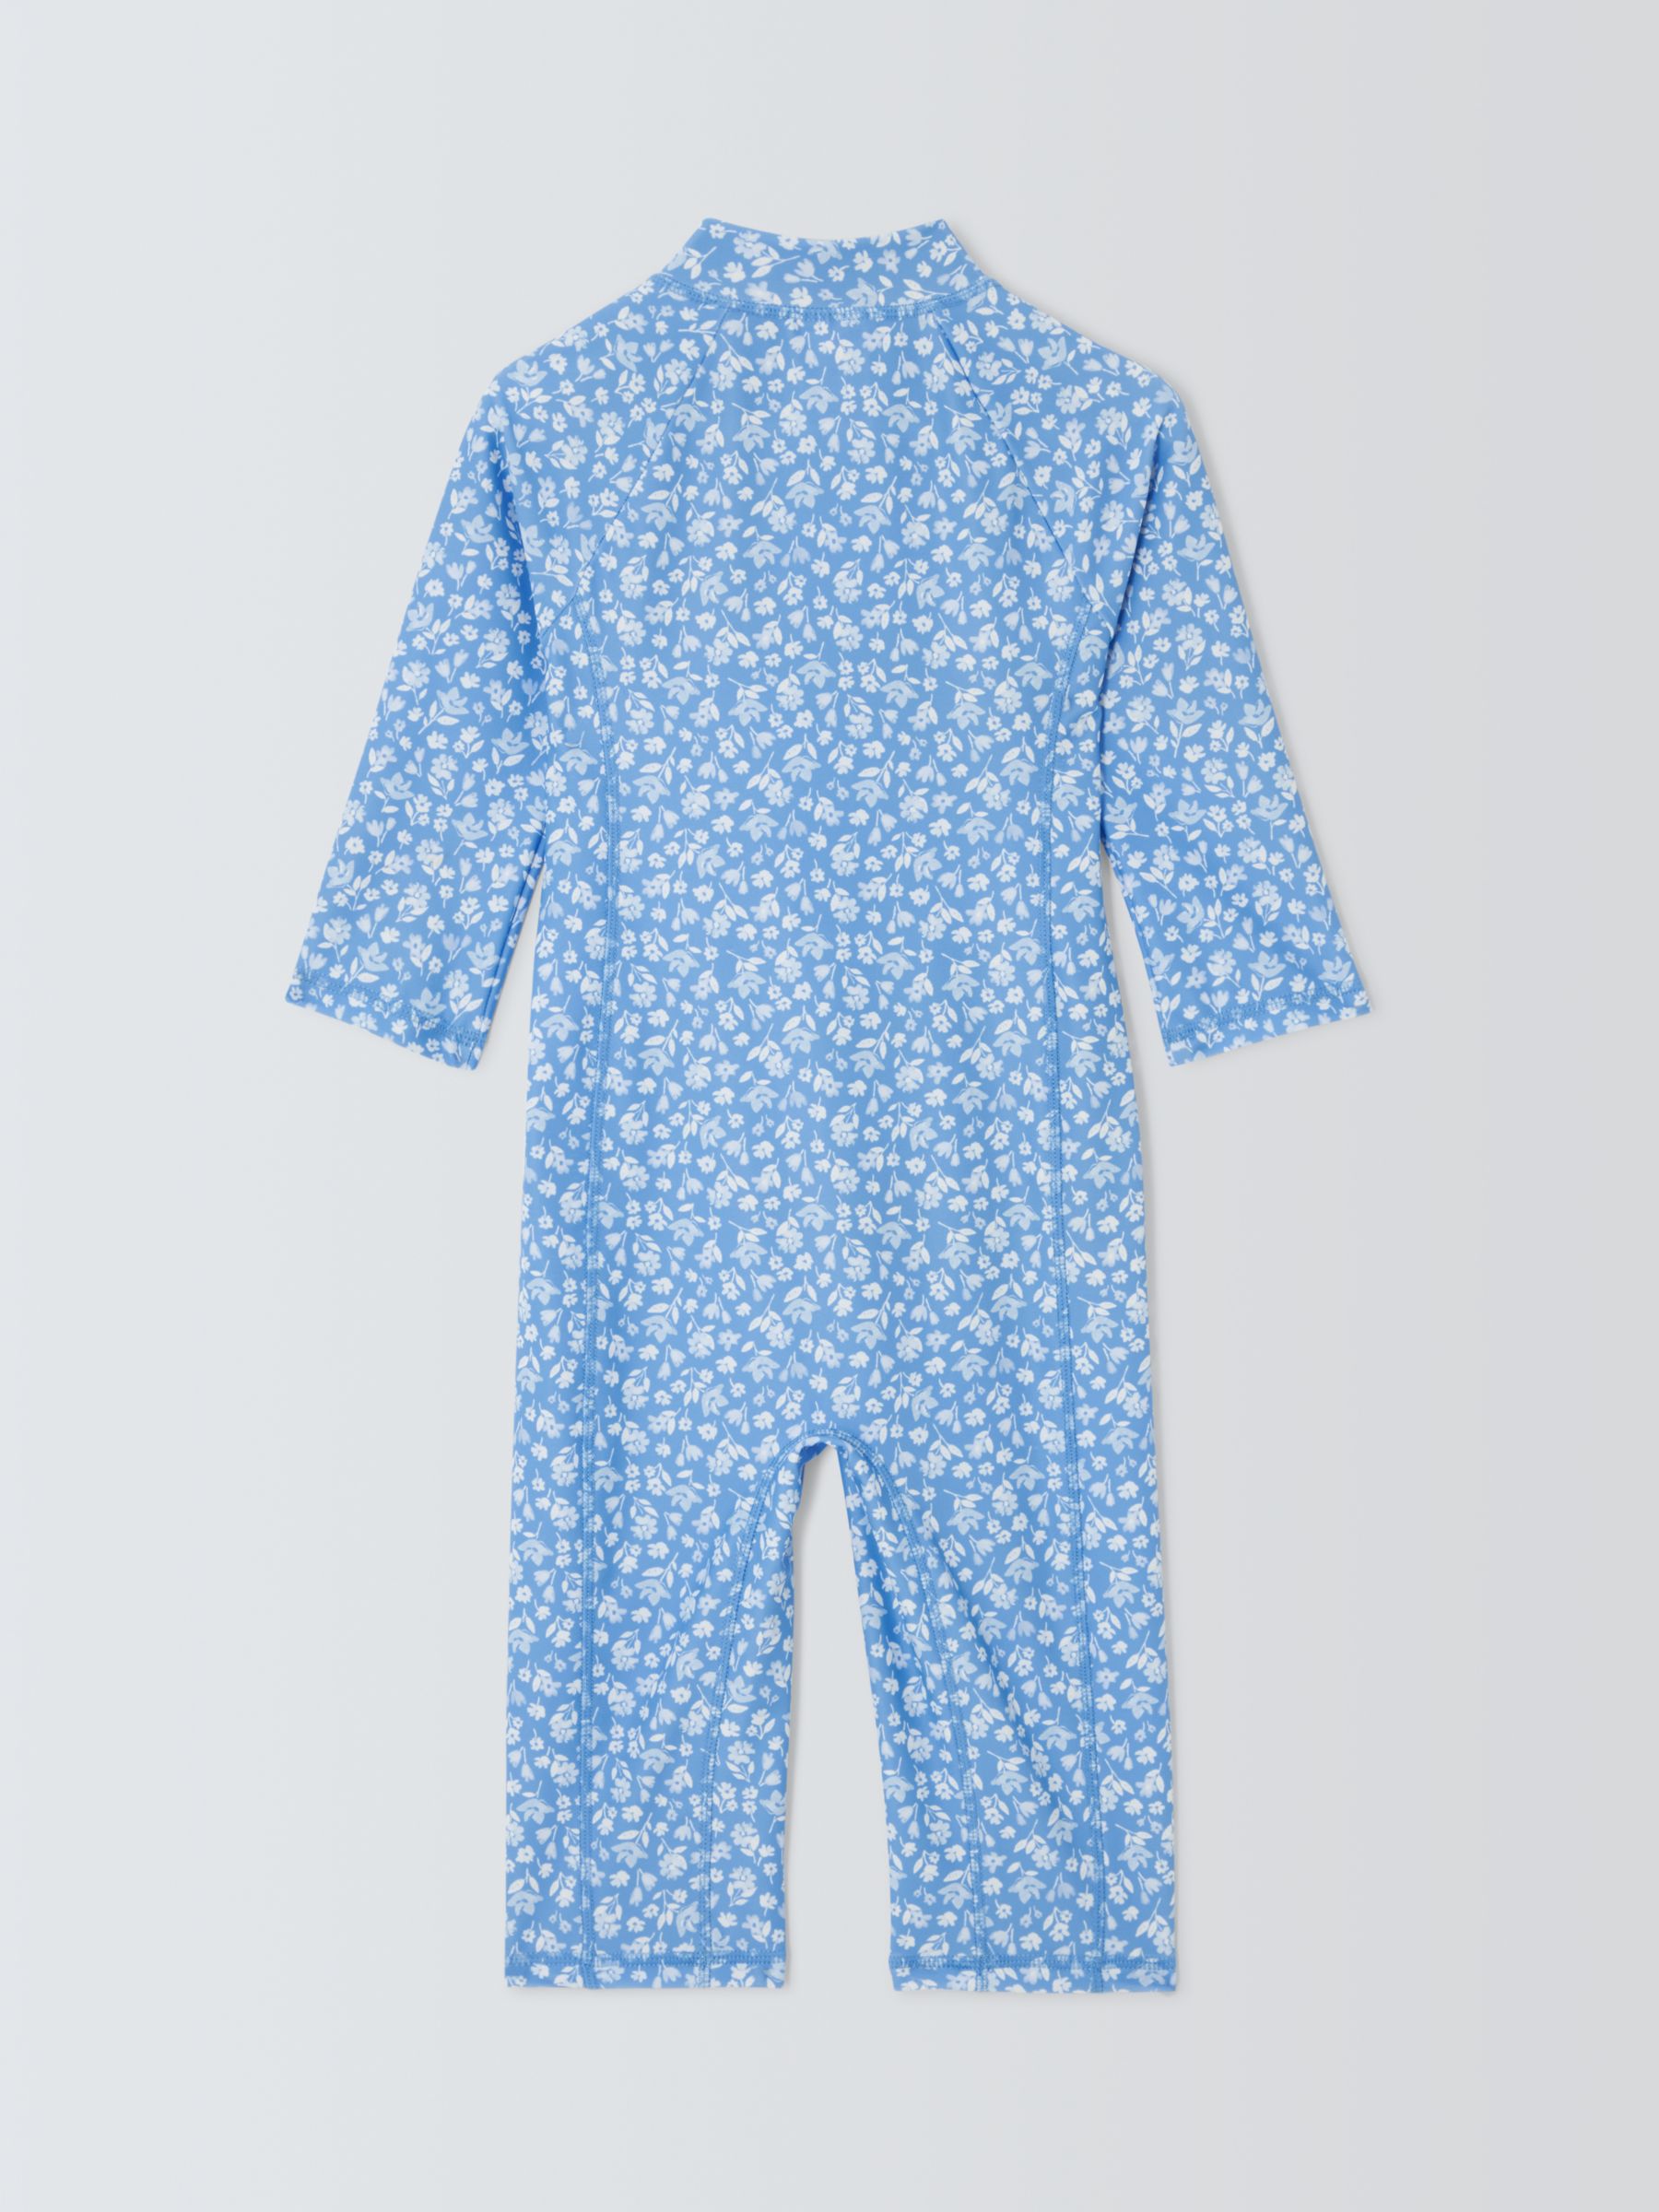 John Lewis Kids' Floral Print Sunpro Swimsuit, Blue, 4 years